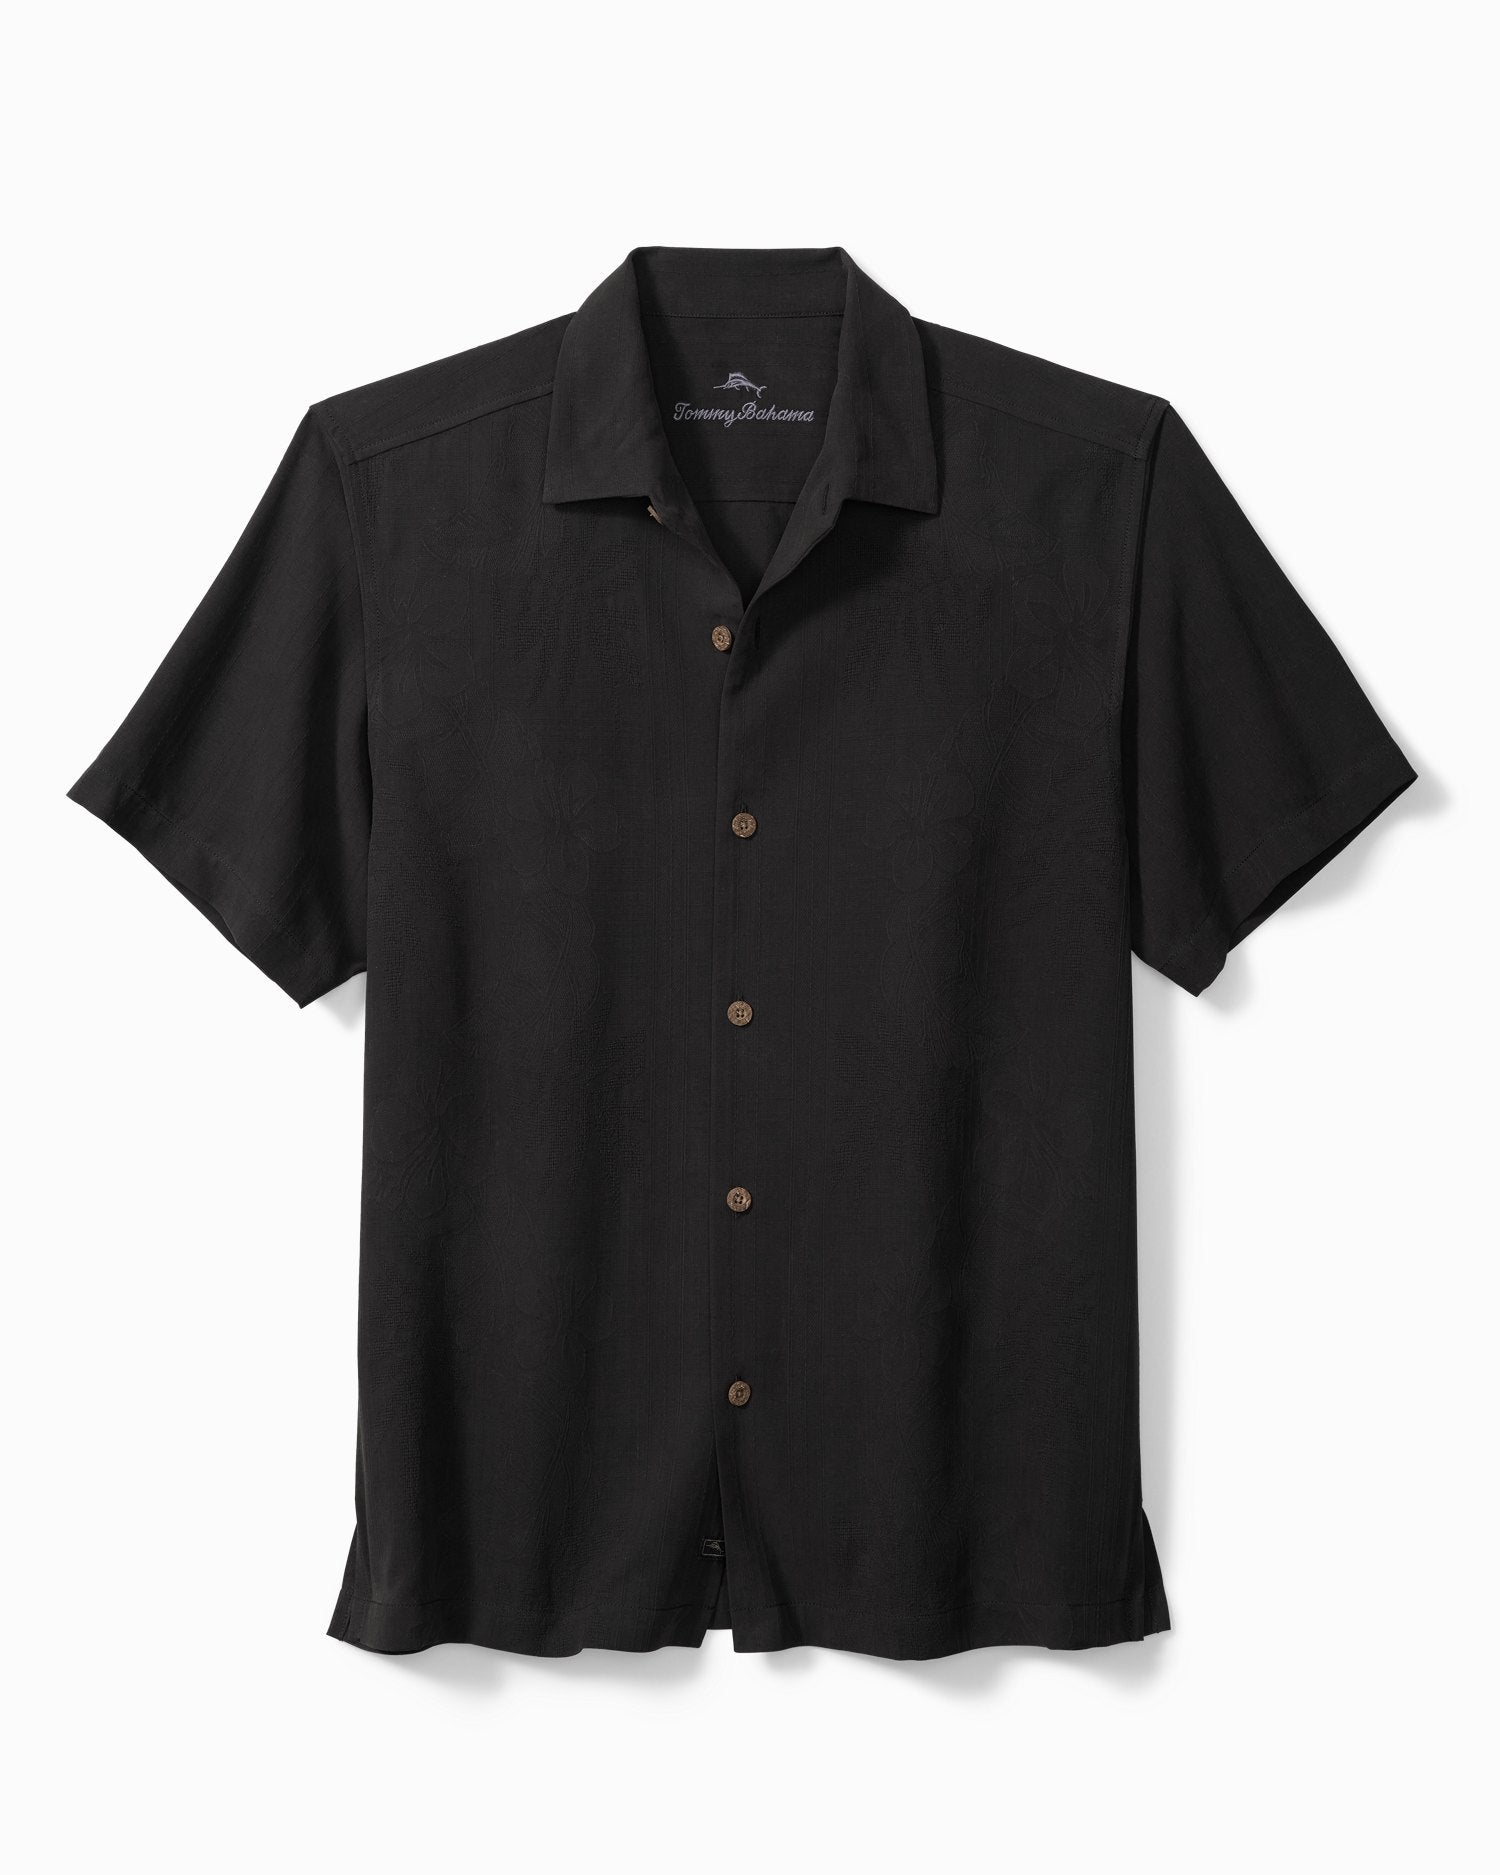 San Francisco Giants Tommy Bahama Silk Camp Button-Up Shirt - Black